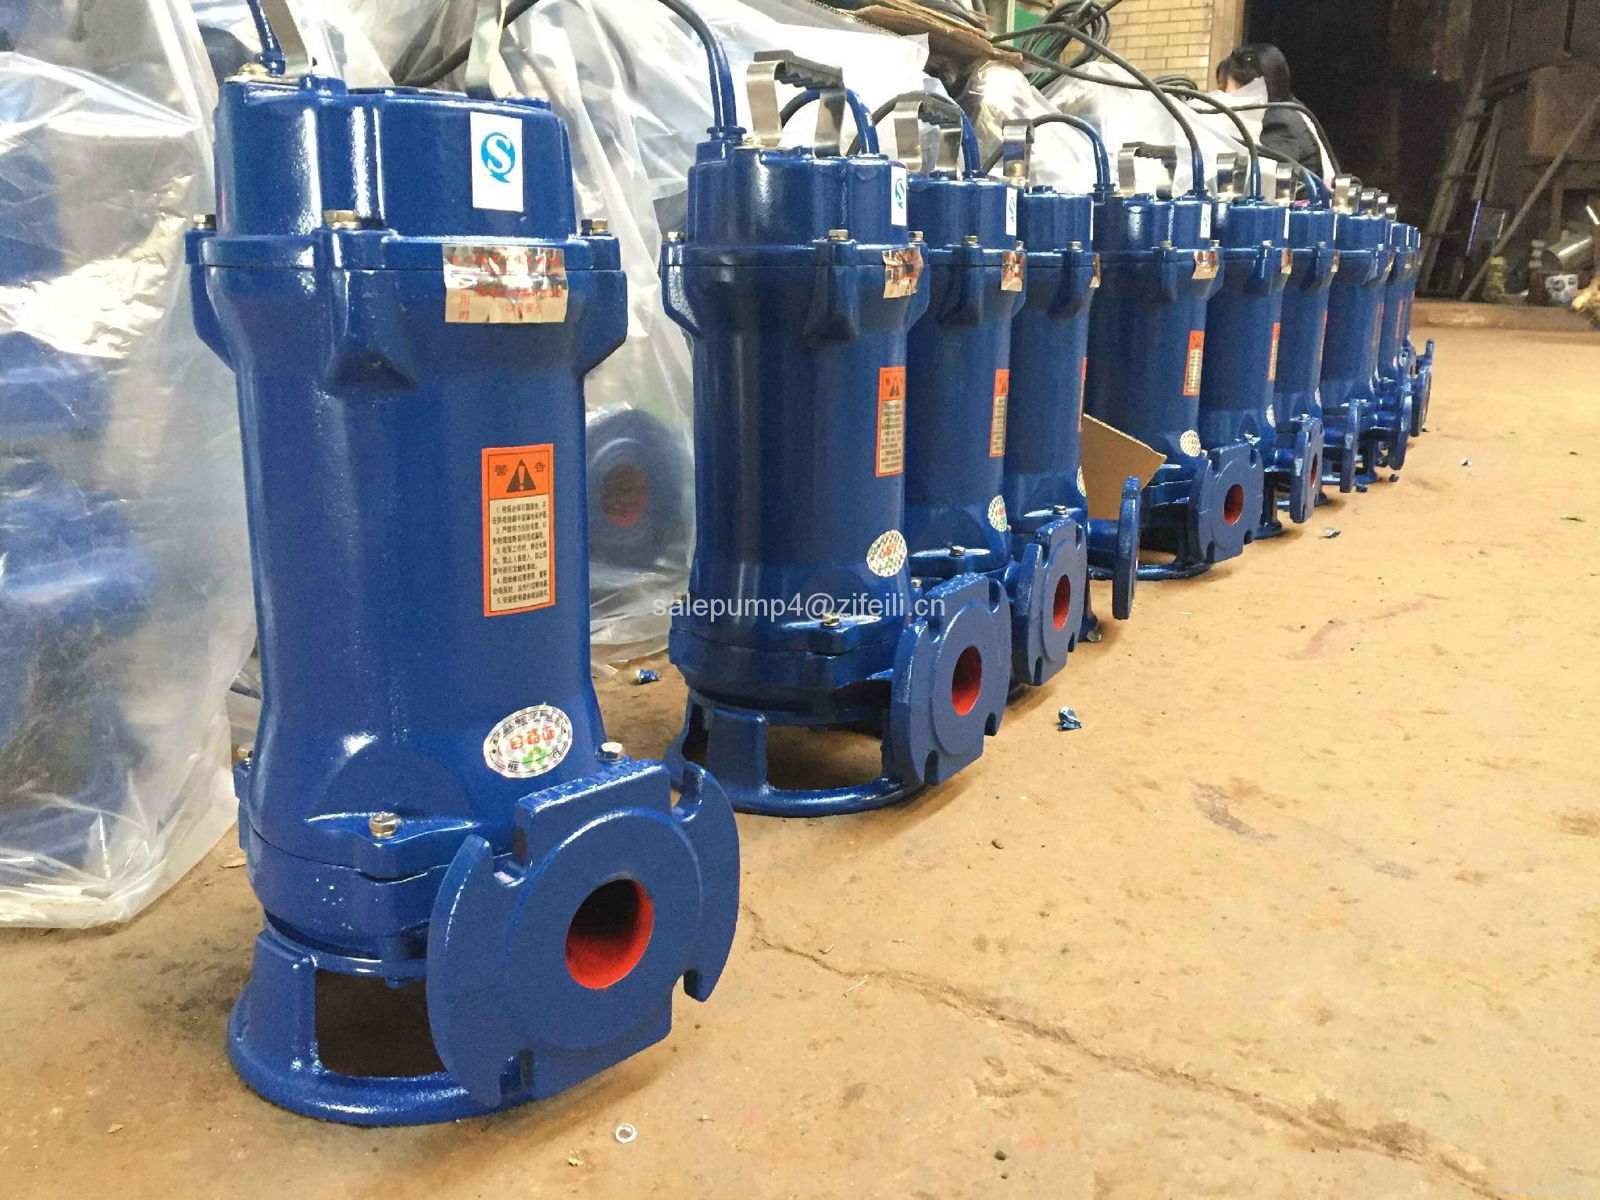 waste sump pump price list submersible sewage grinder pumps 5